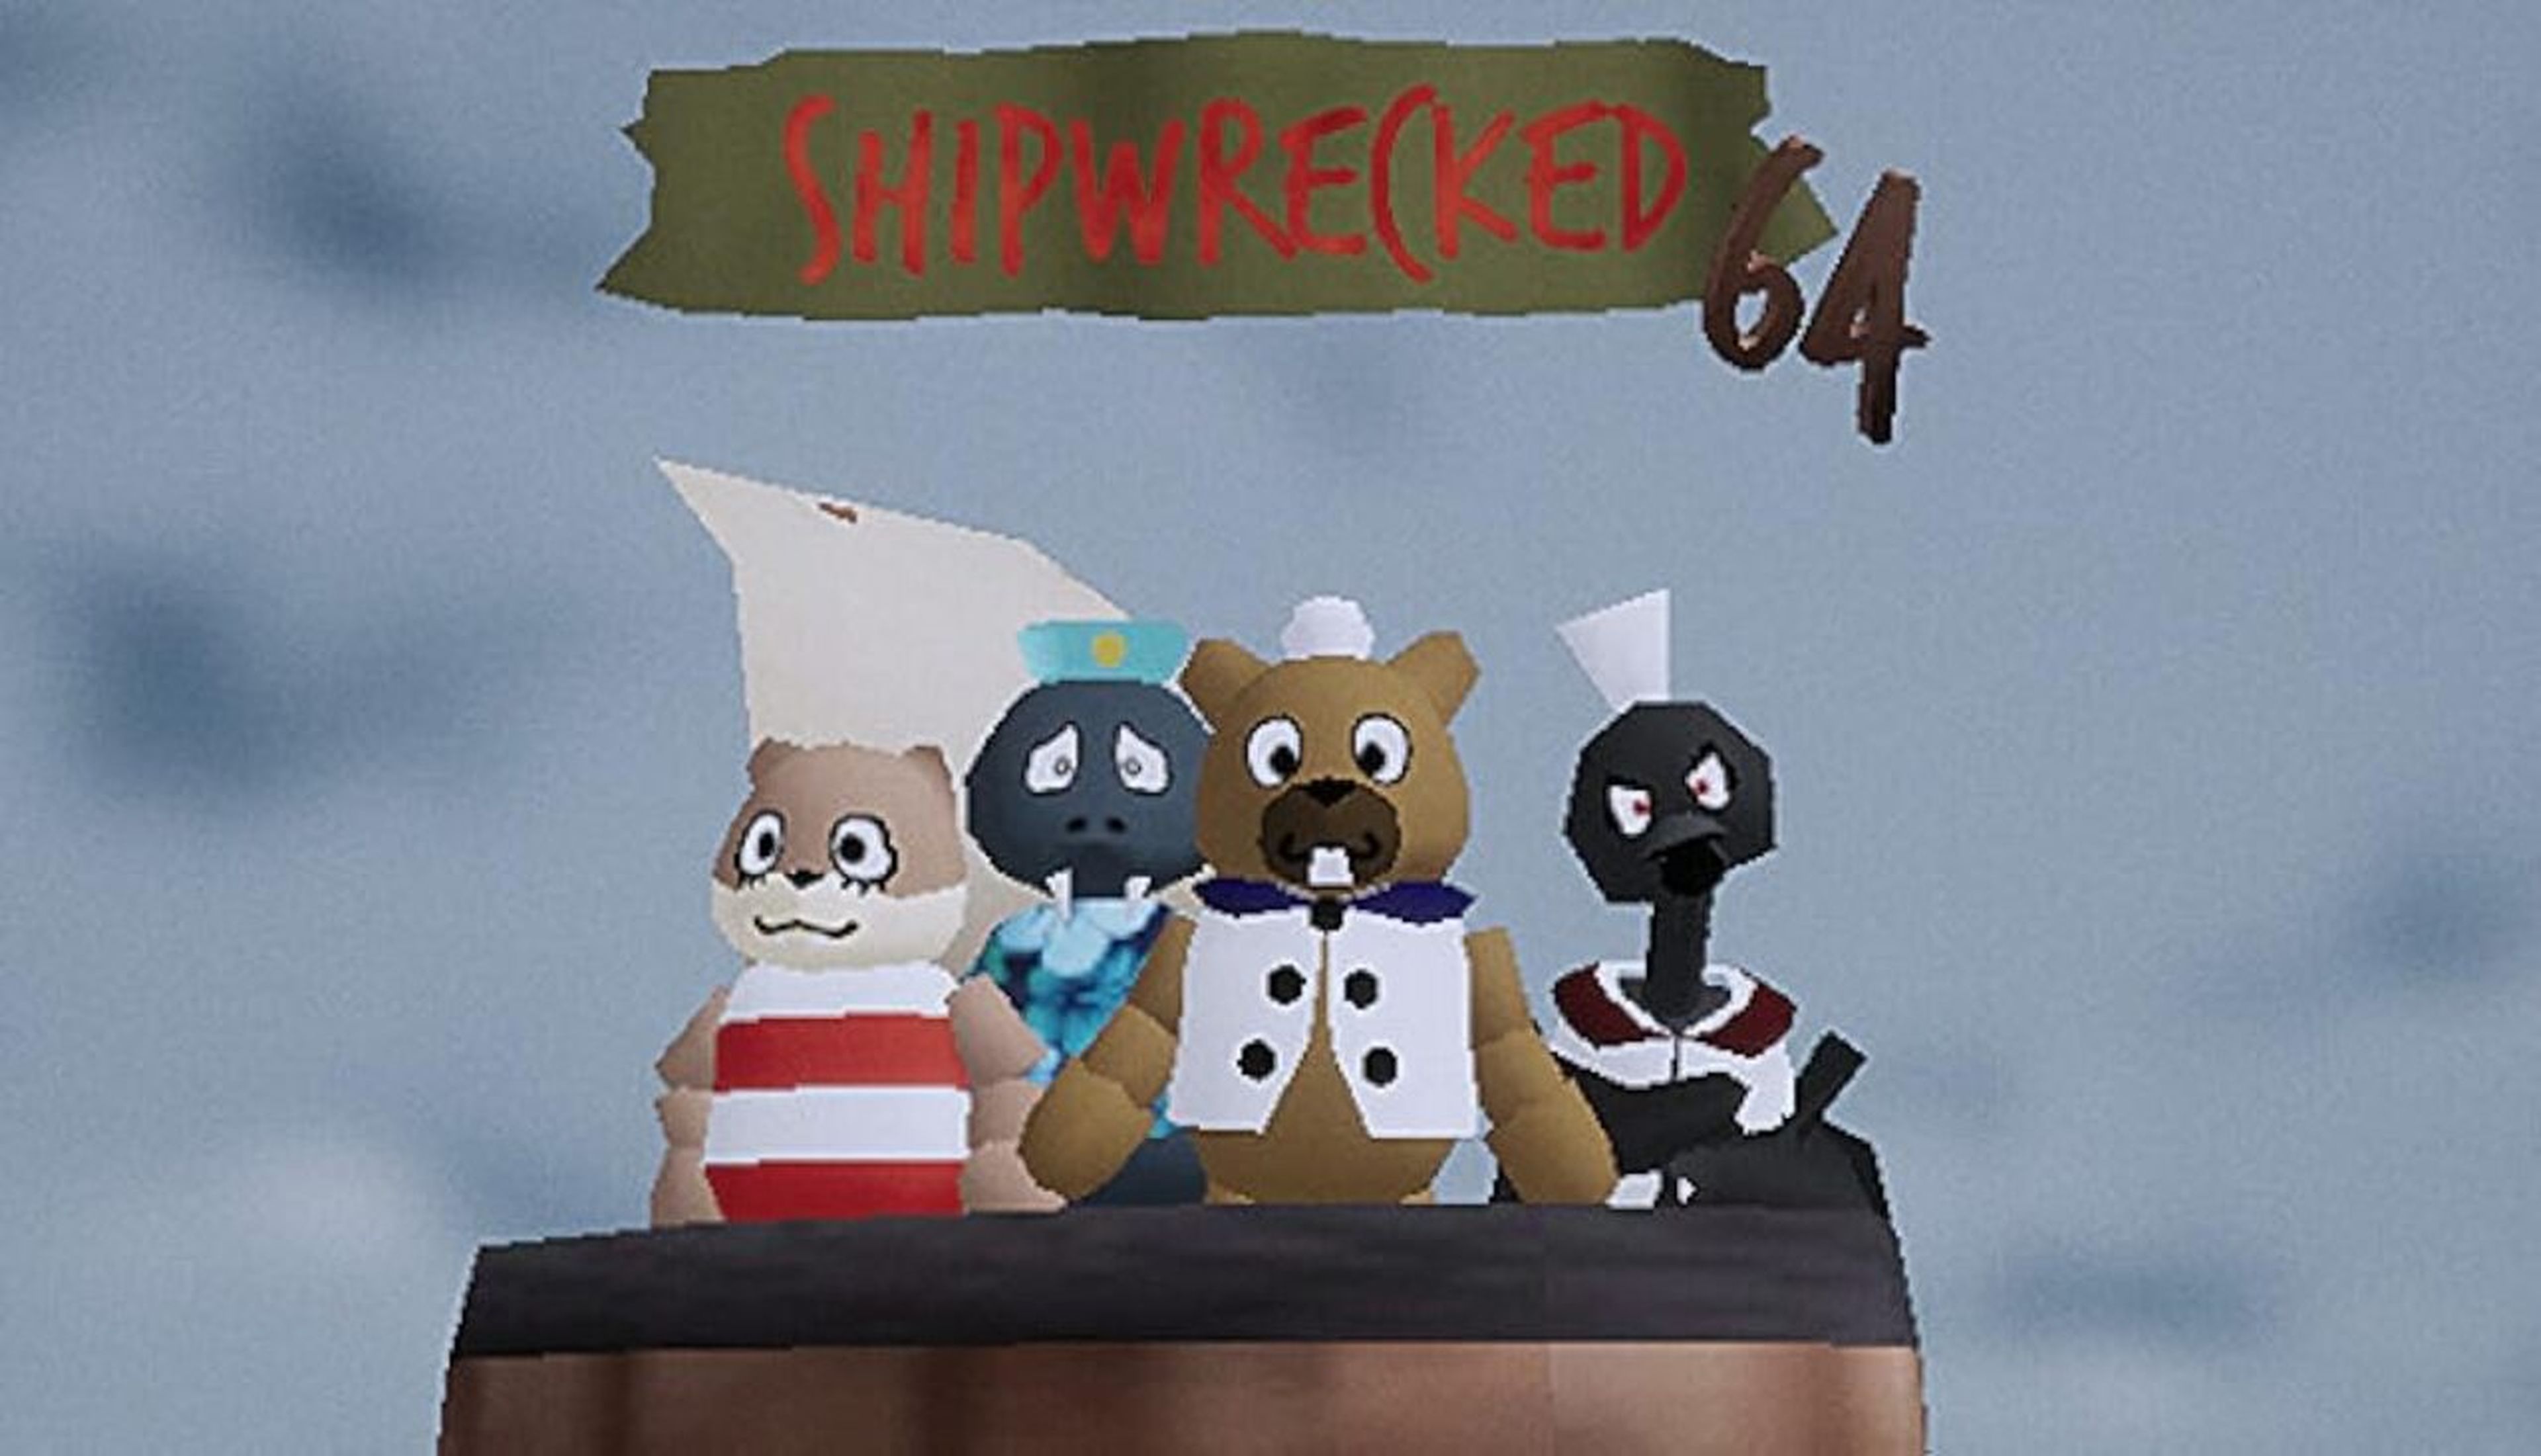 Shipwrecked 64